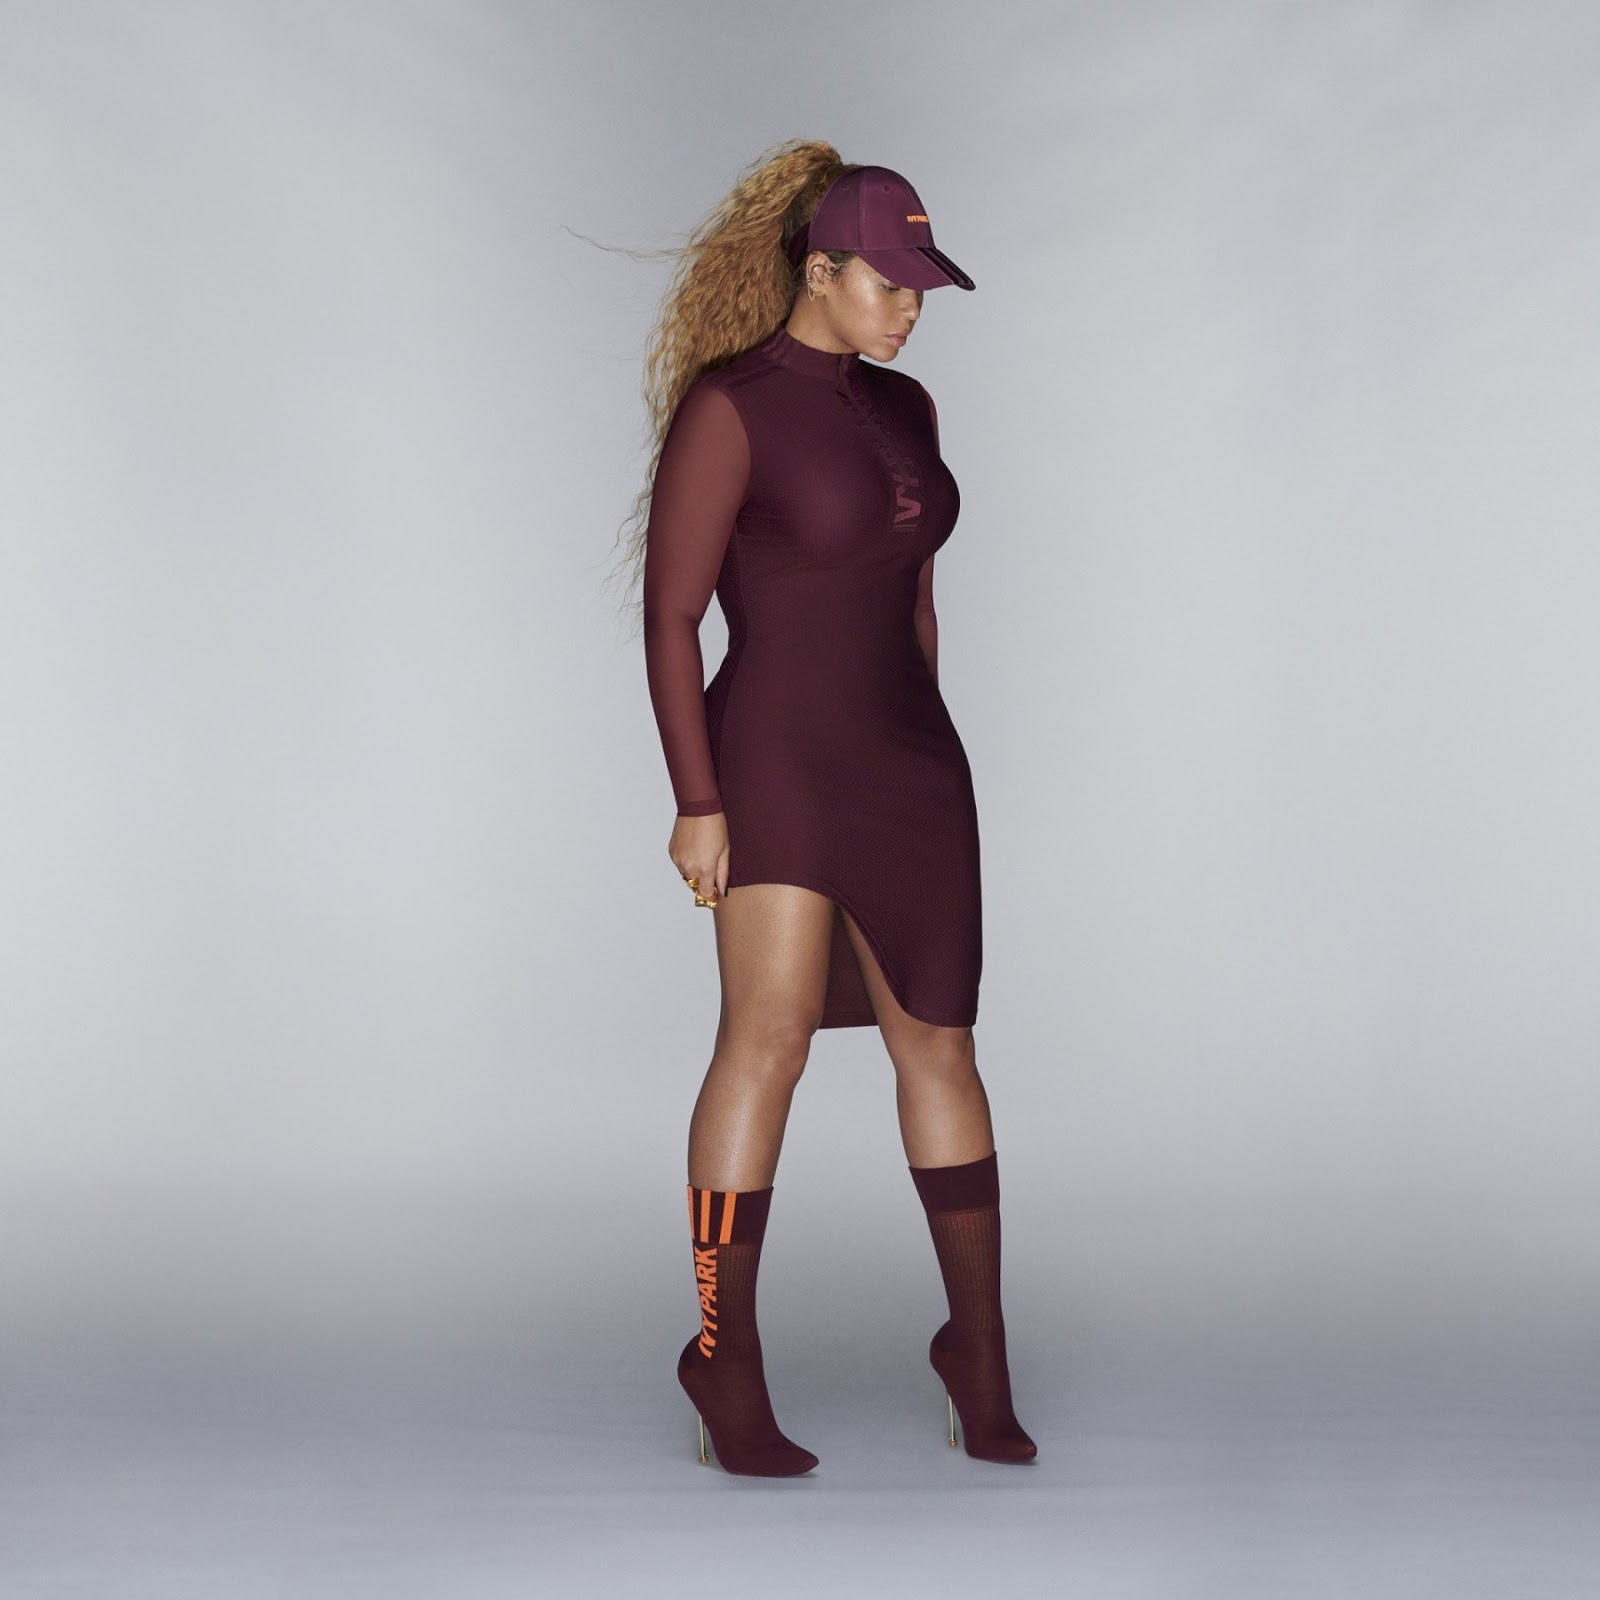 Beyonce Adidas X Ivy Park Campaign Pics | BootymotionTV